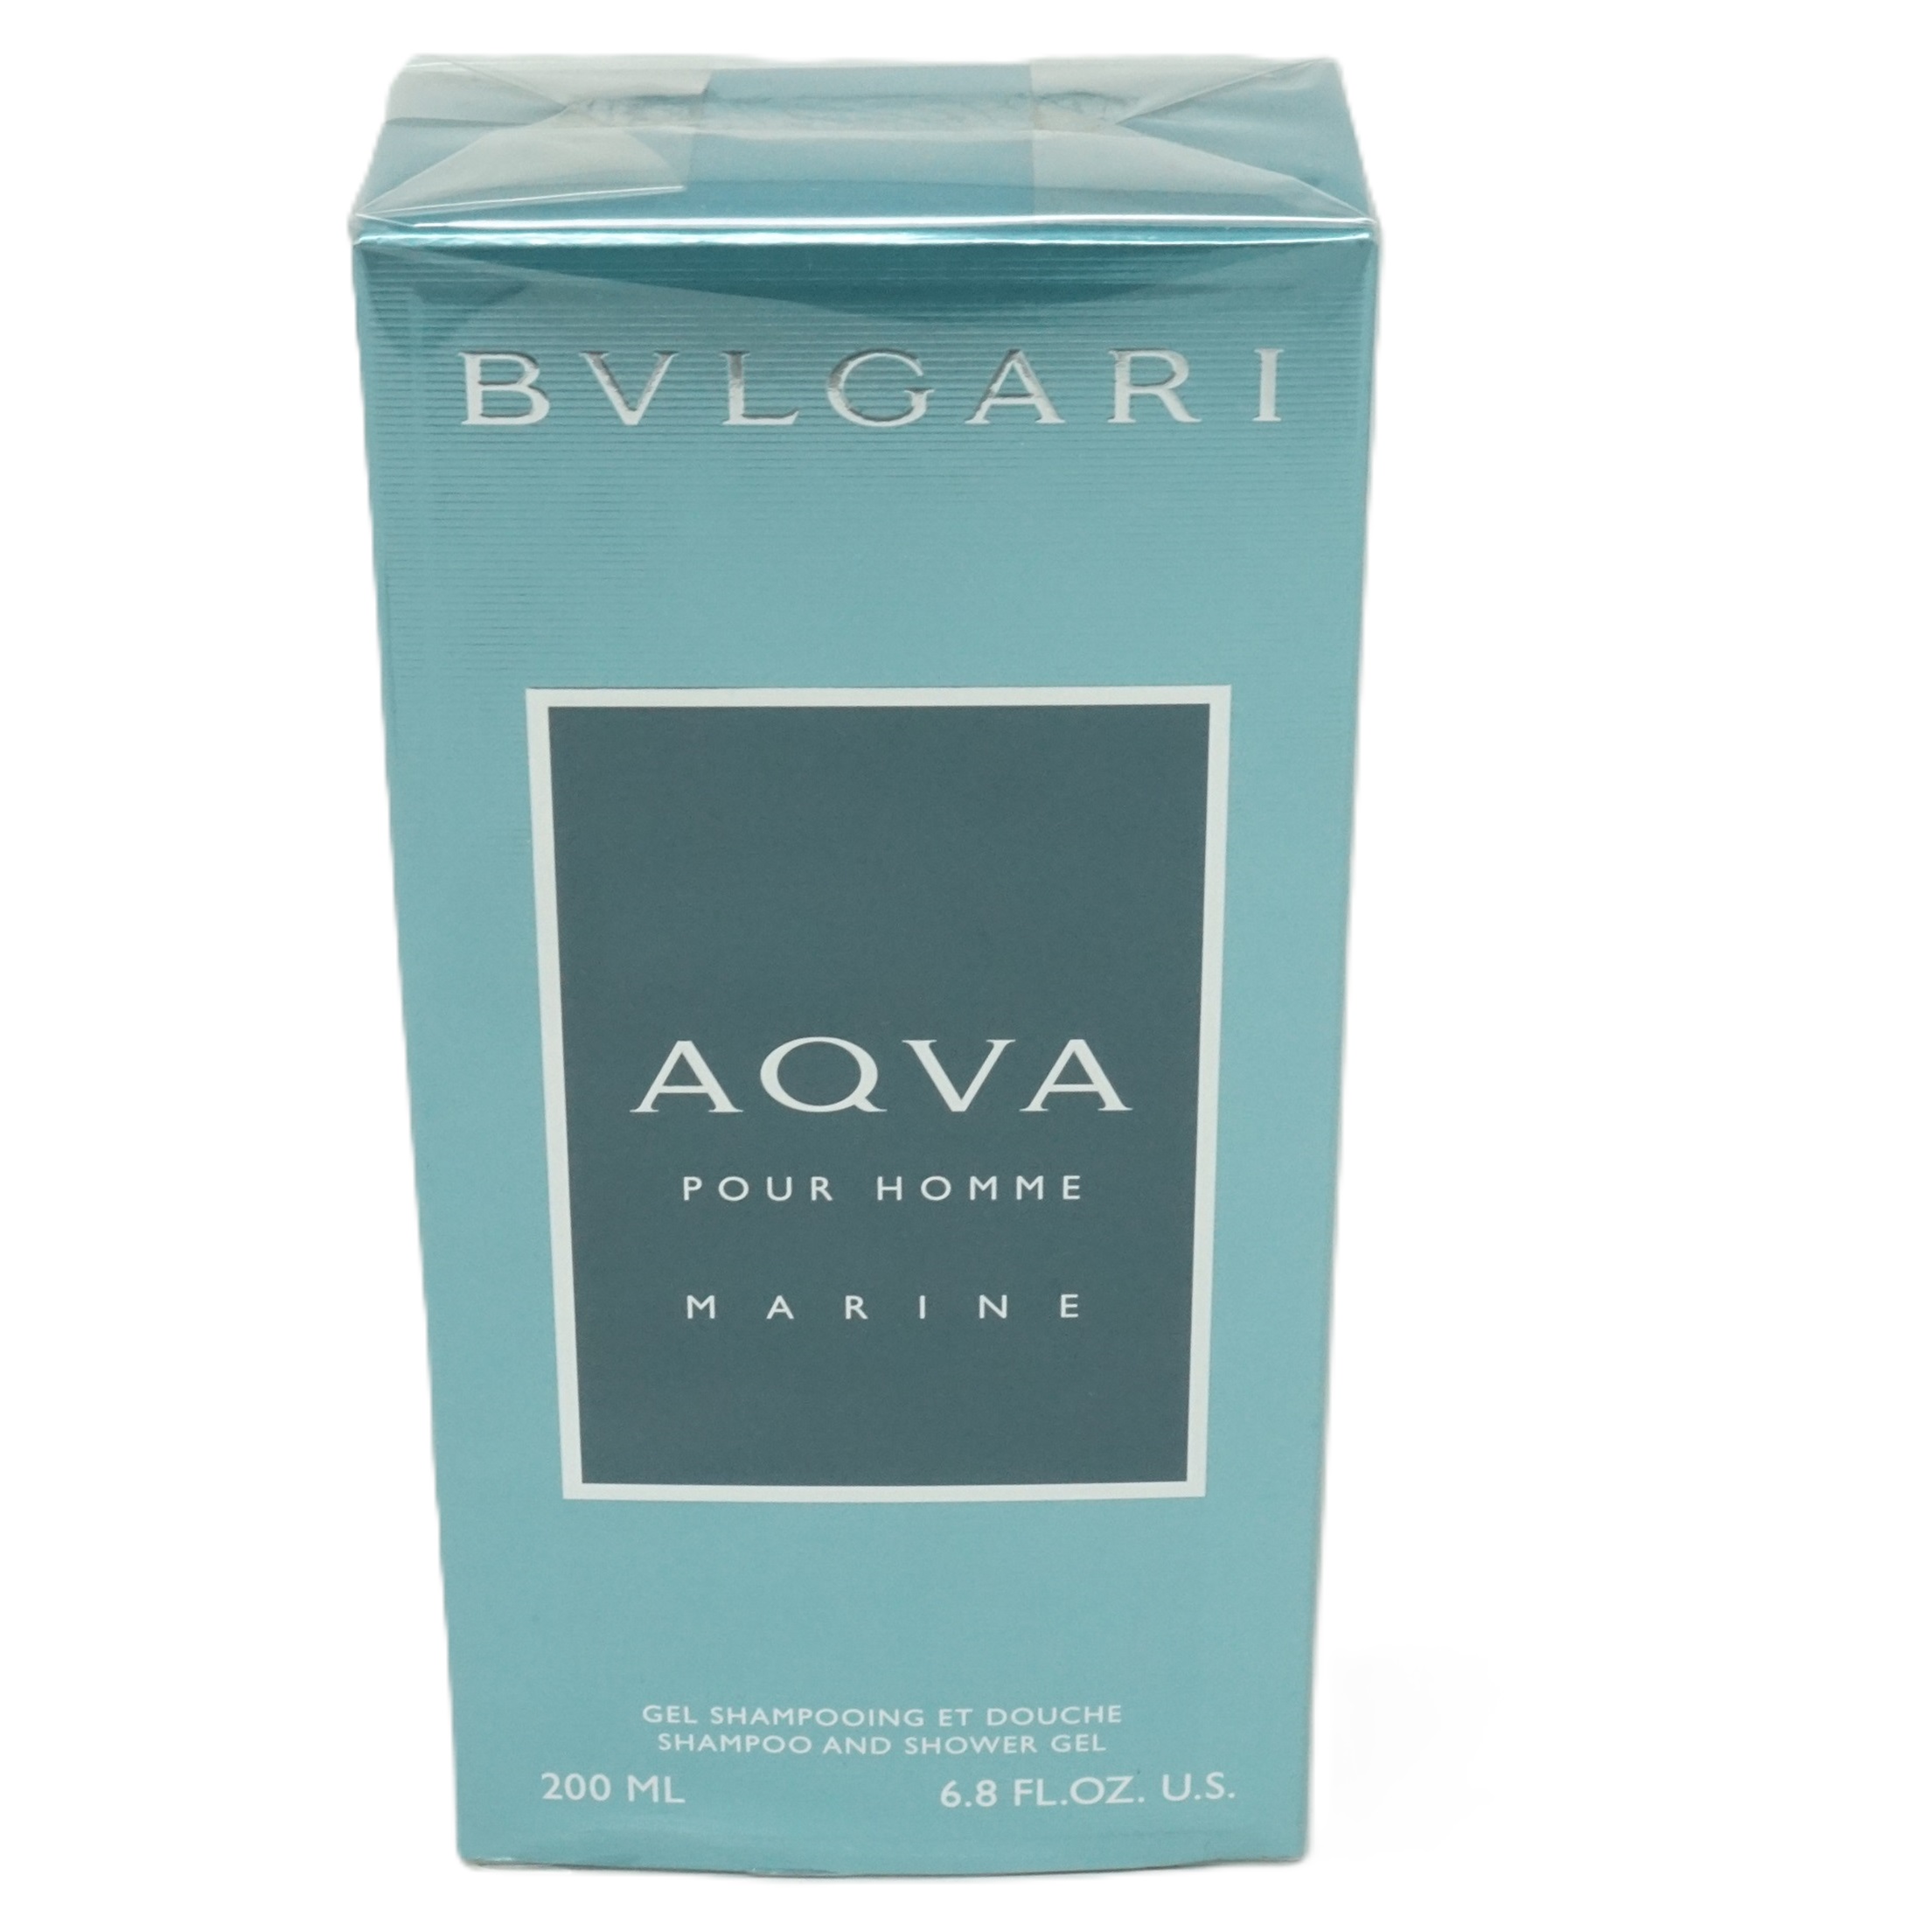 Bvlgari Aqva Pour Homme Marine Shampoo and Shower gel 200ml